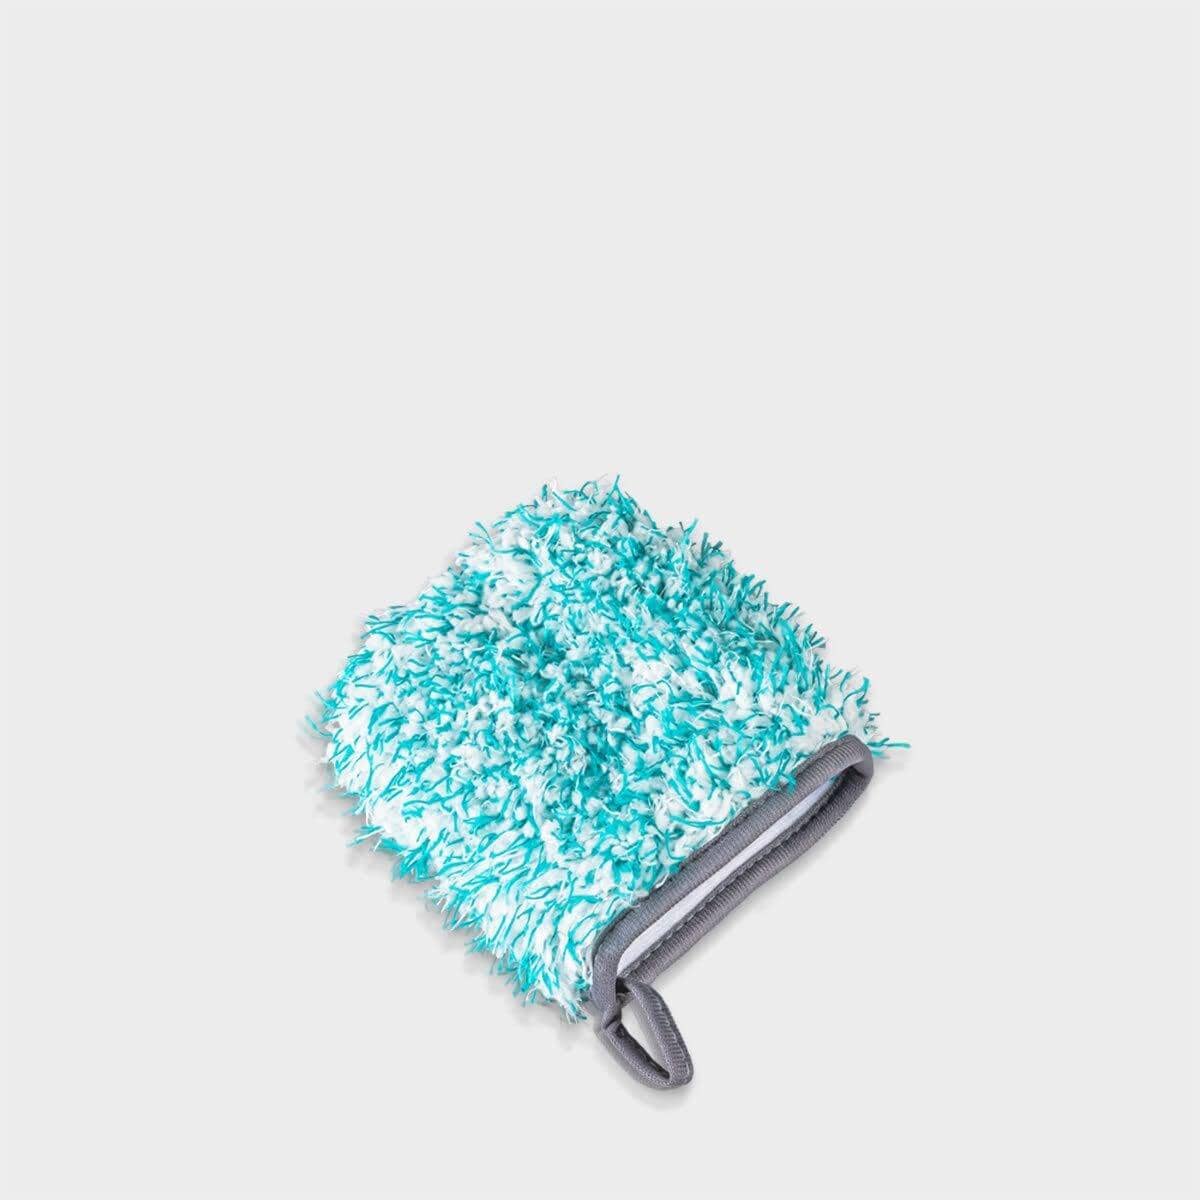 Nexgen Microfiber Car Wash Mitt | Soft, Plush Bristles